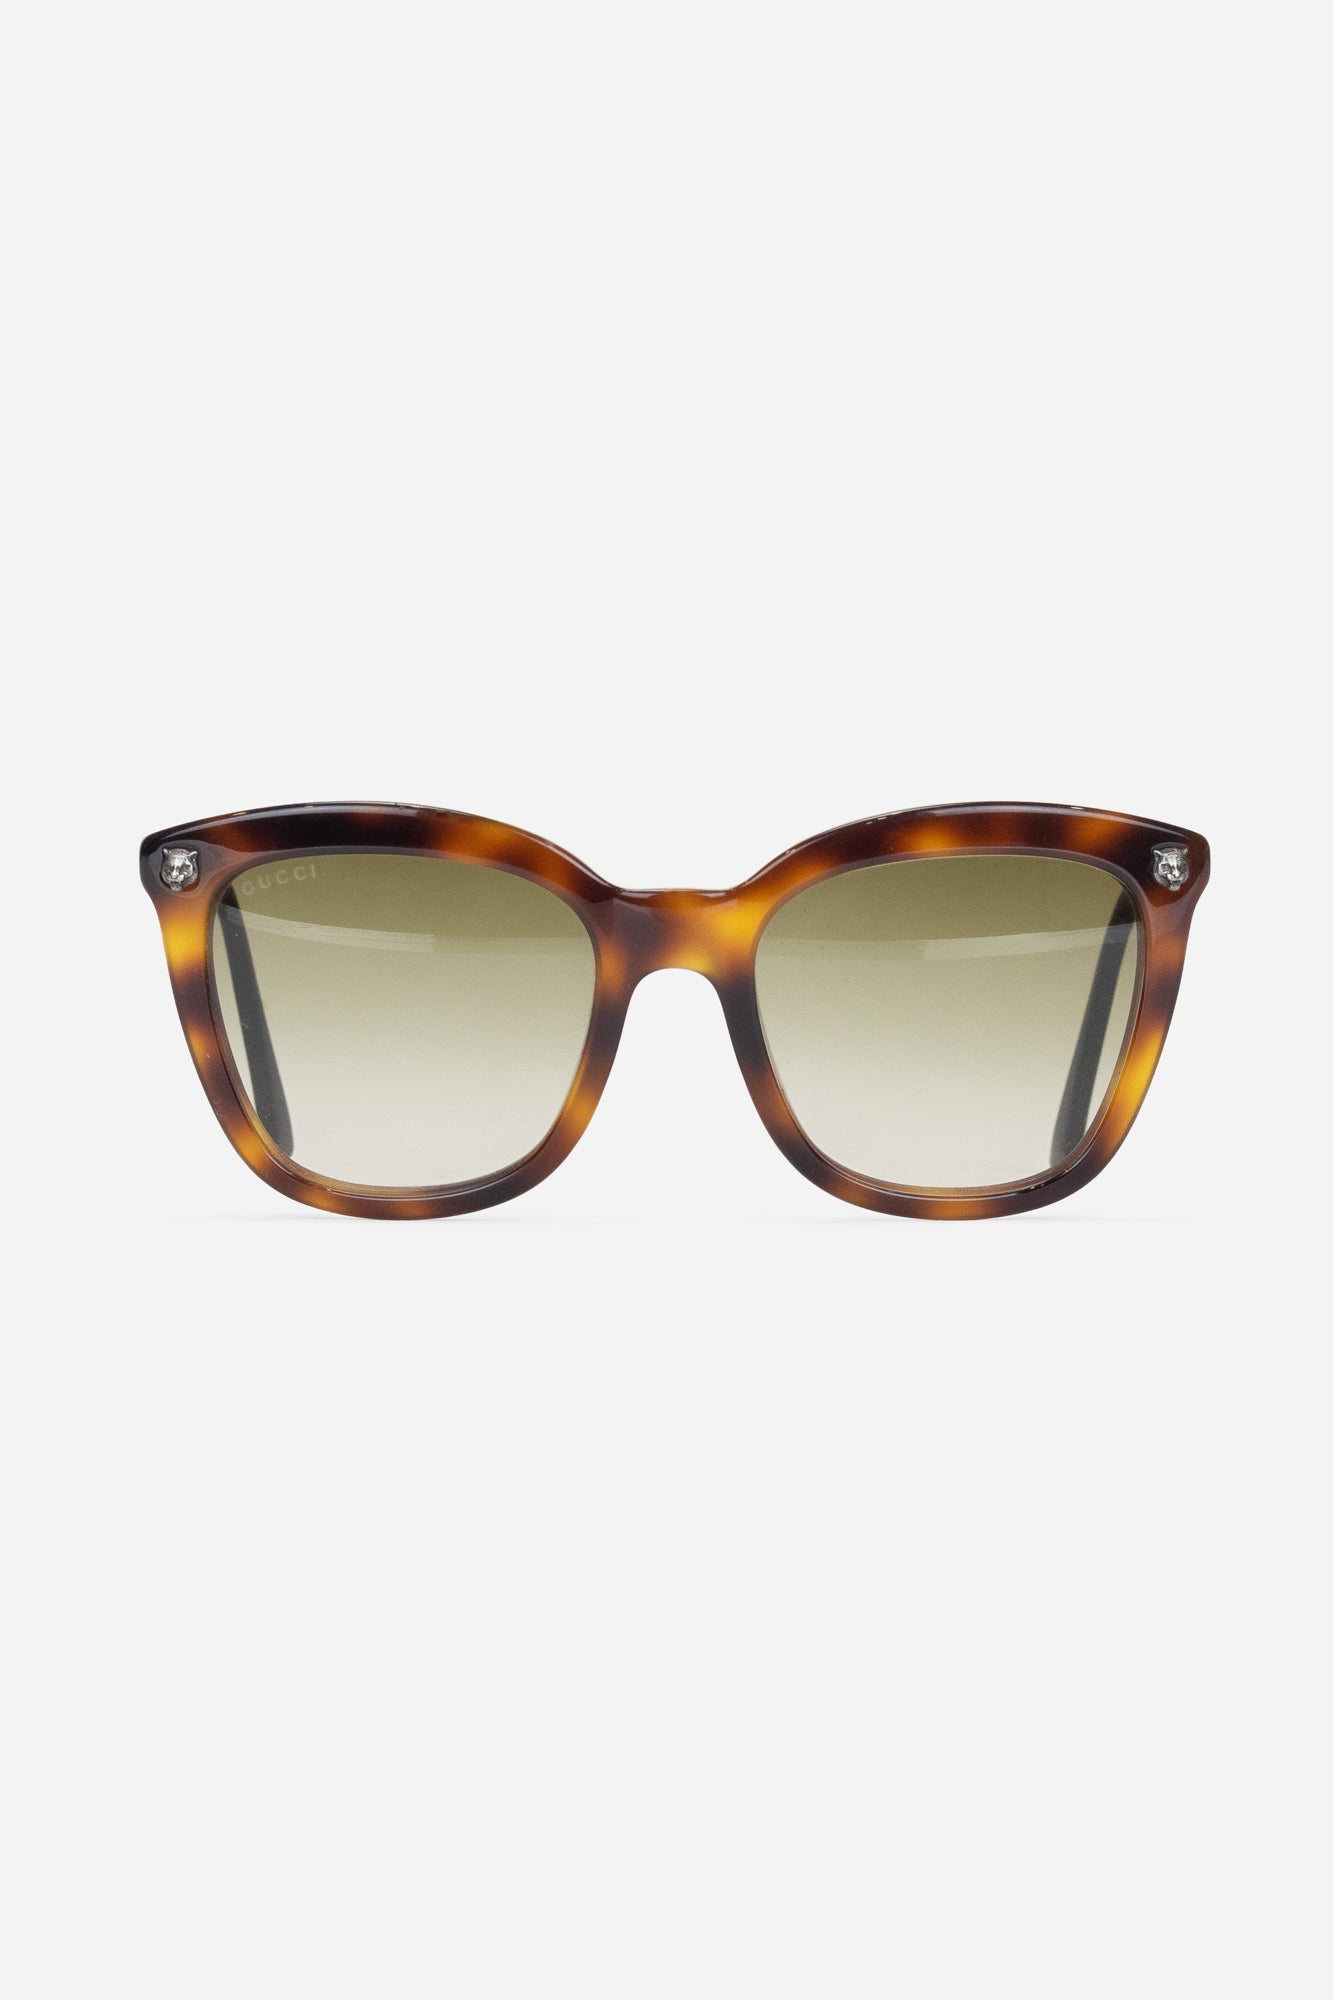 Tortoiseshell Cat Eye Sunglasses with Metal Details